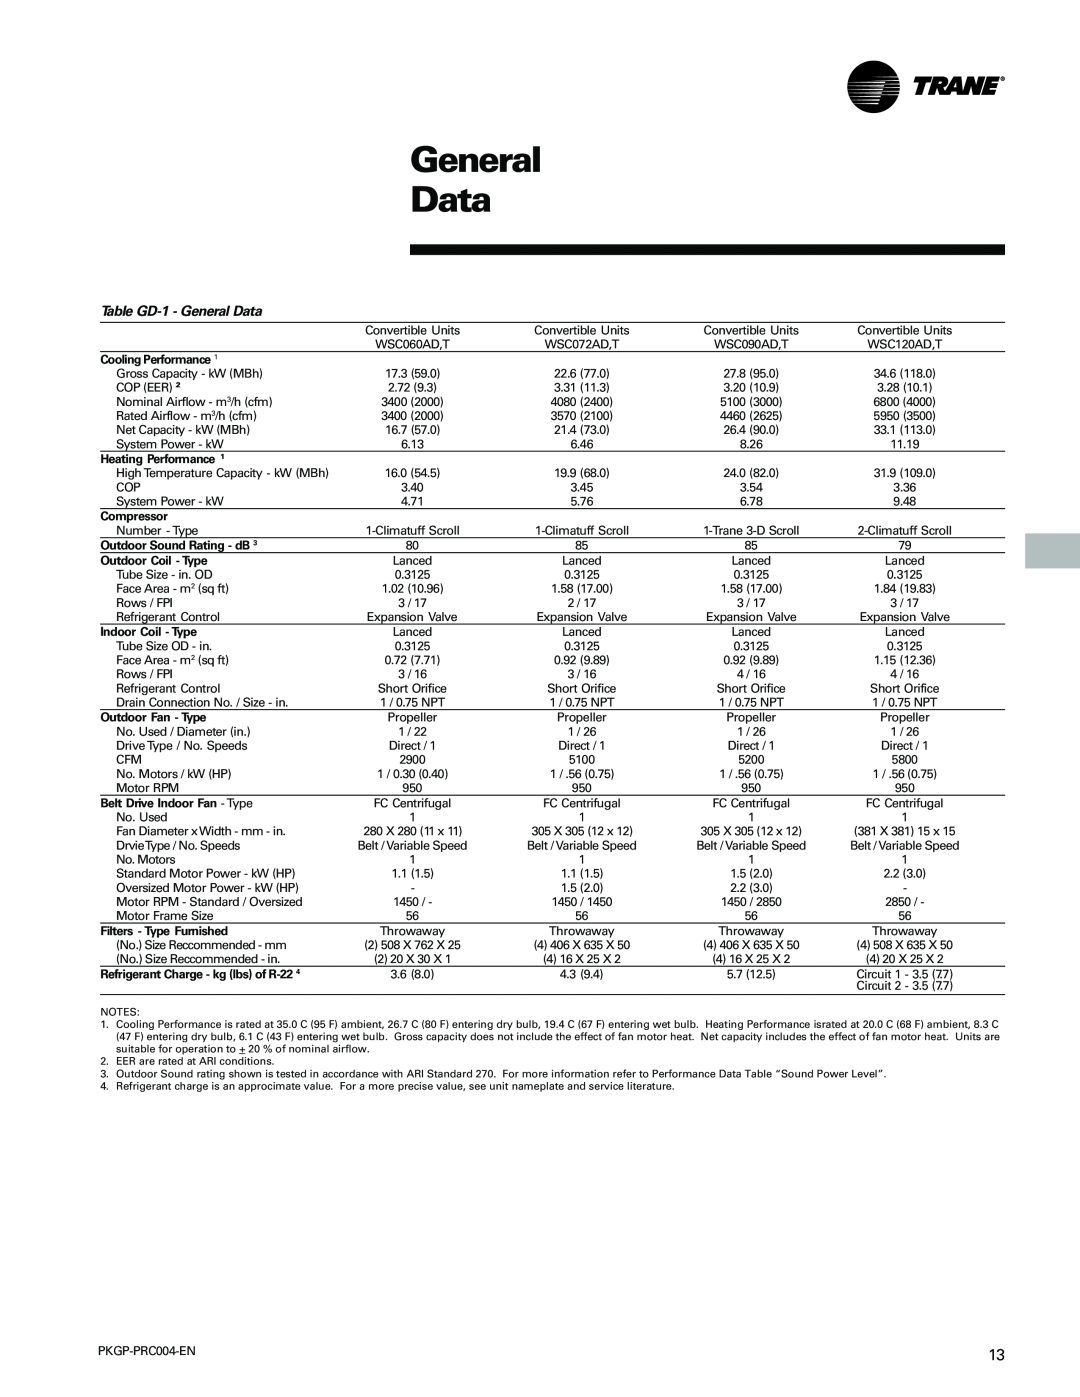 Trane WSC060-120 manual Table GD-1- General Data 